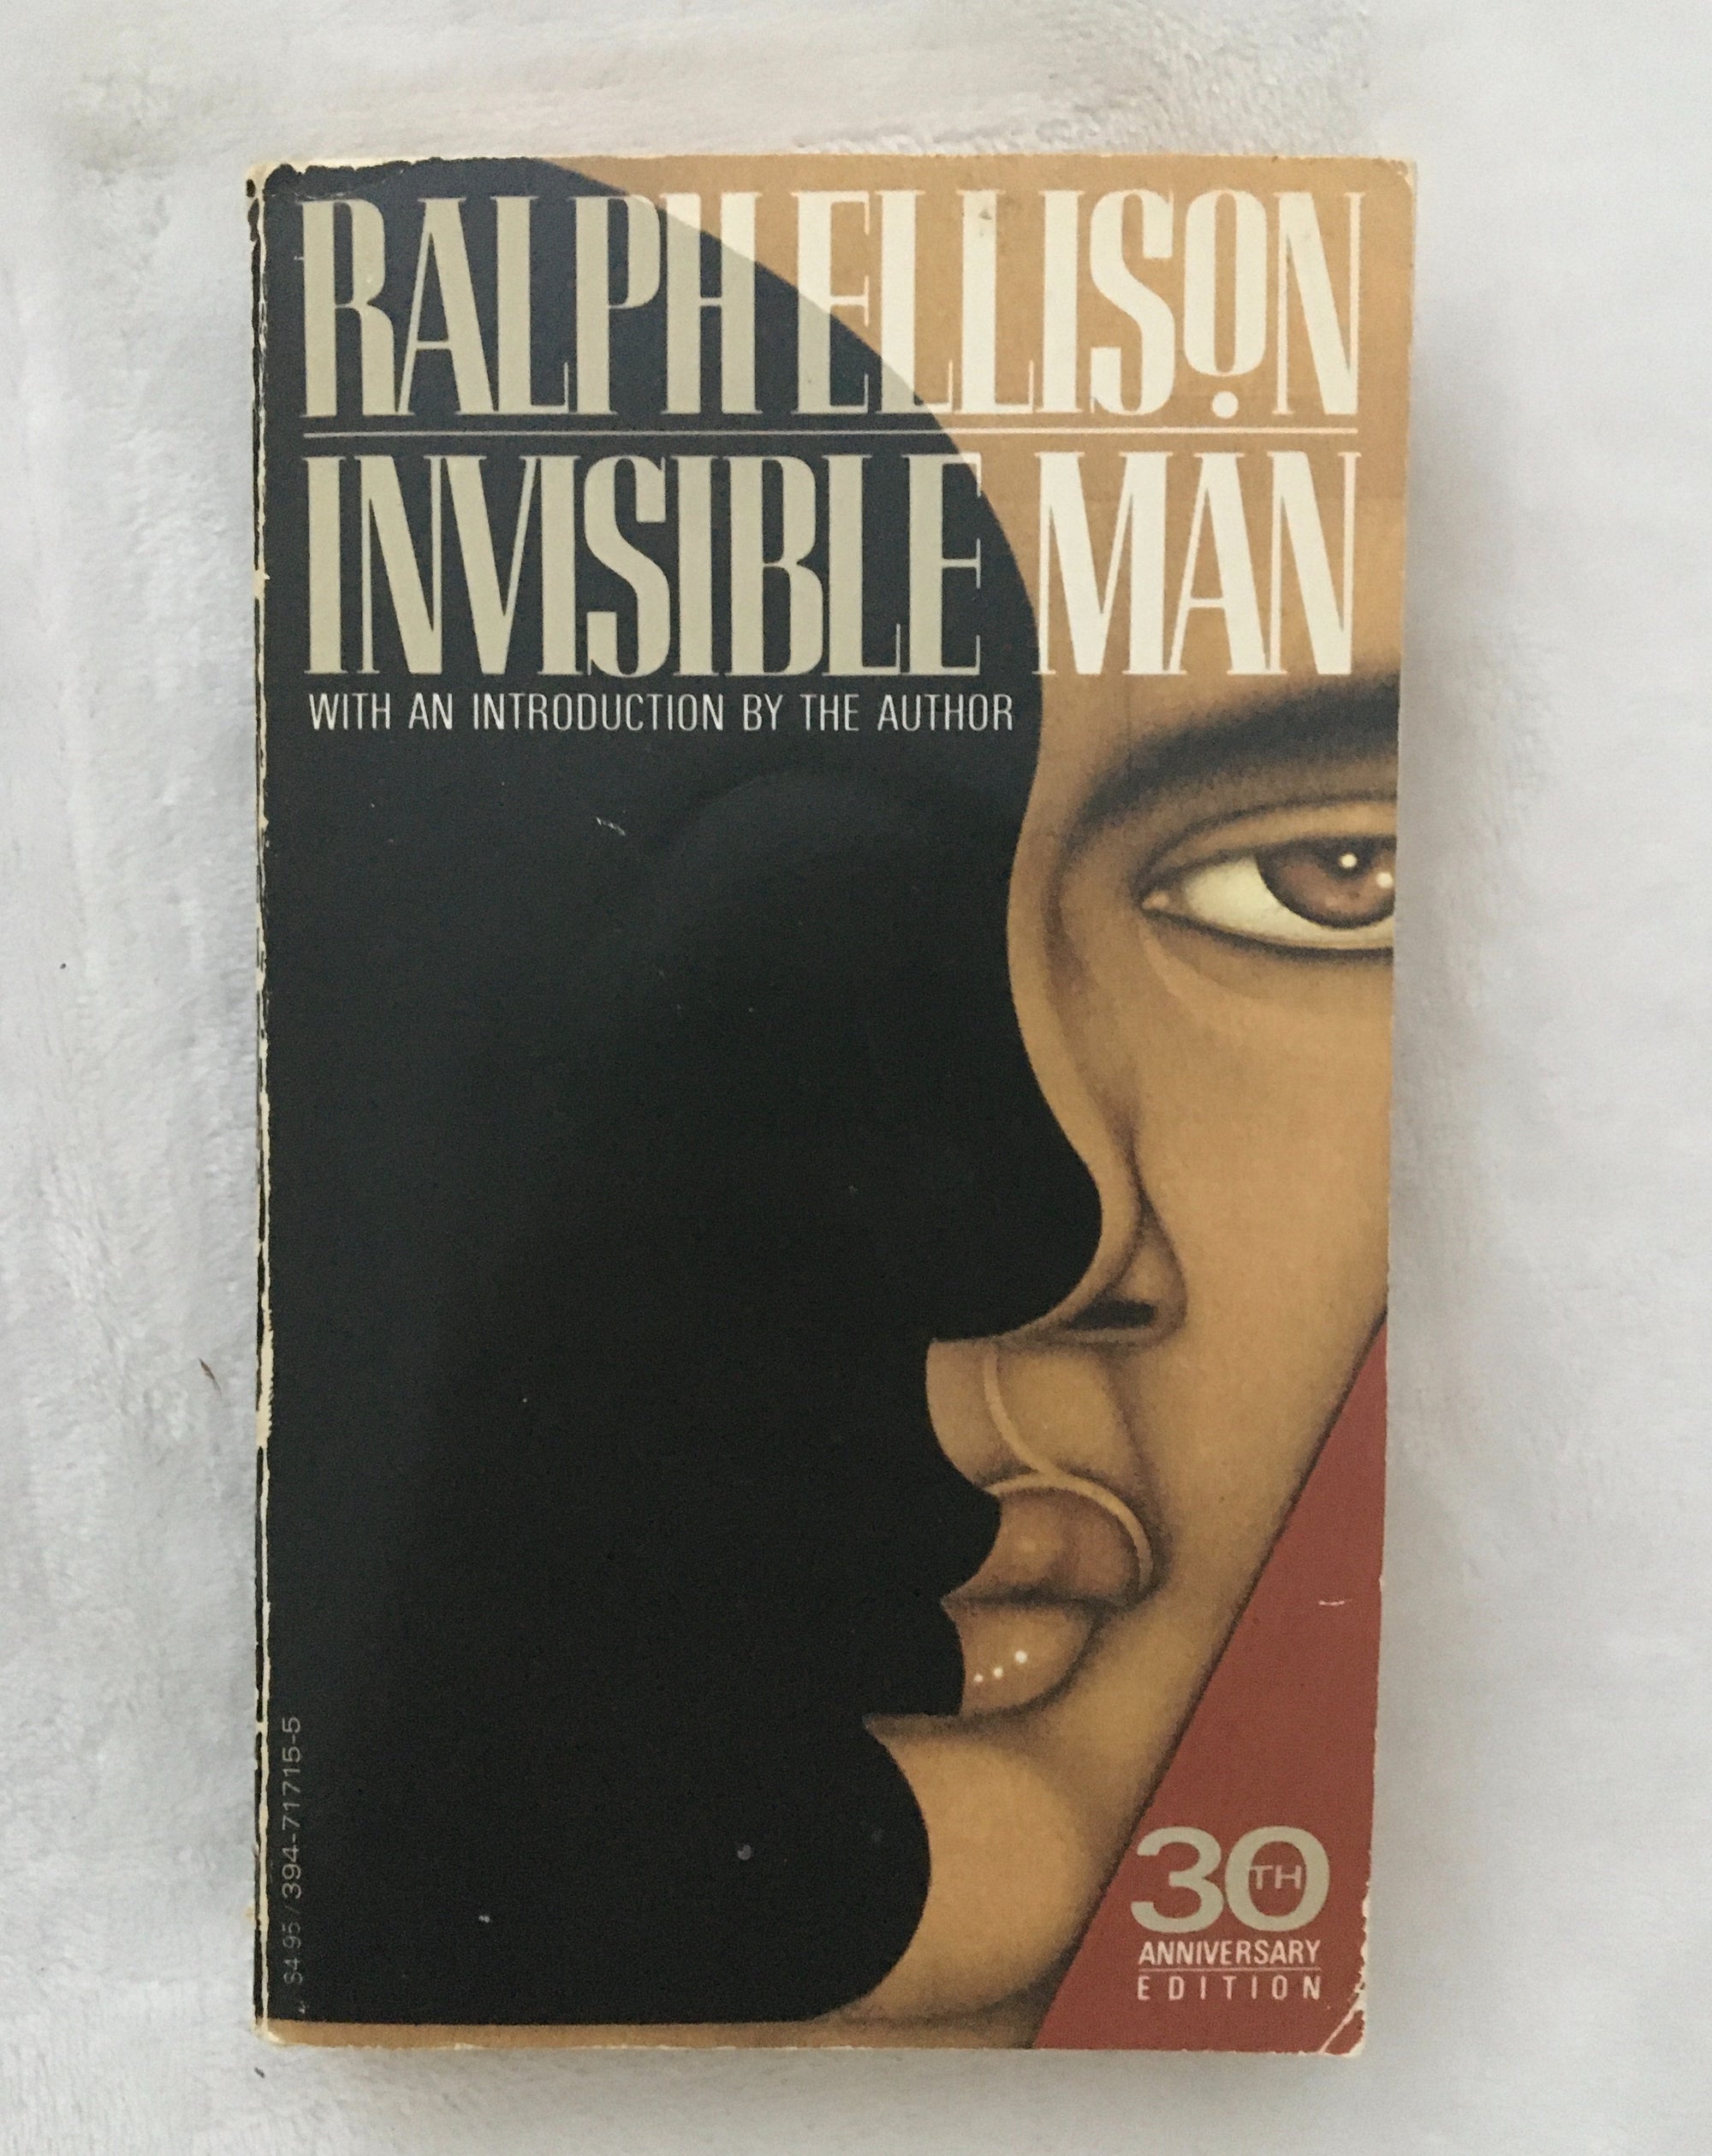 Invisible Man by Ralph Ellison, book, Ten Dollar Books, Ten Dollar Books